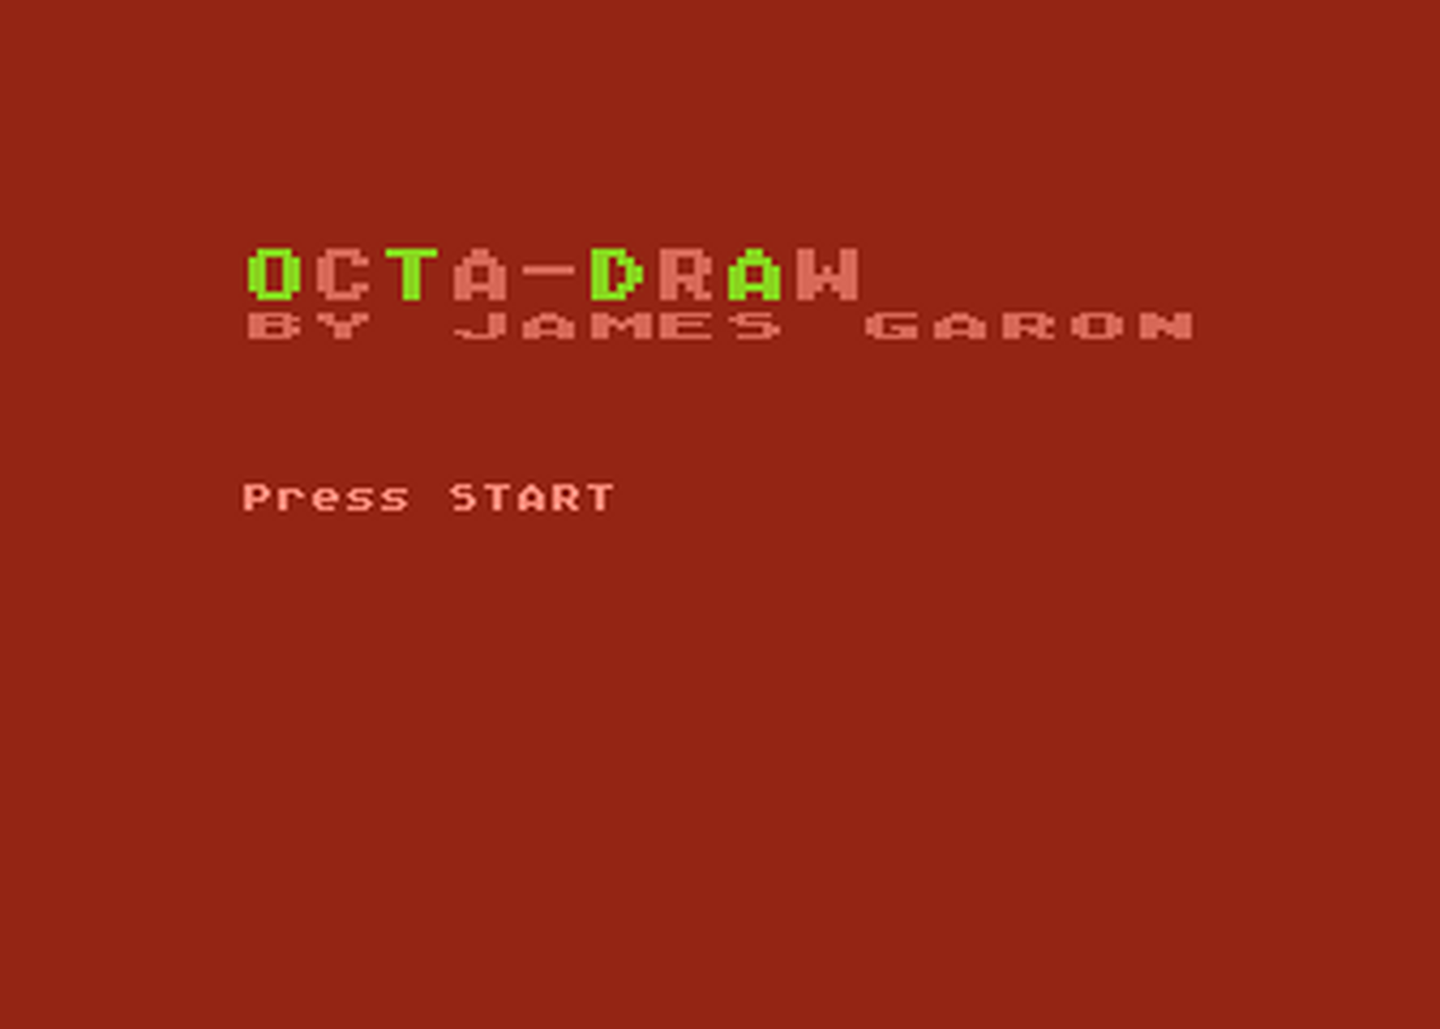 Atari GameBase Octa-Draw Softside_Publications 1980